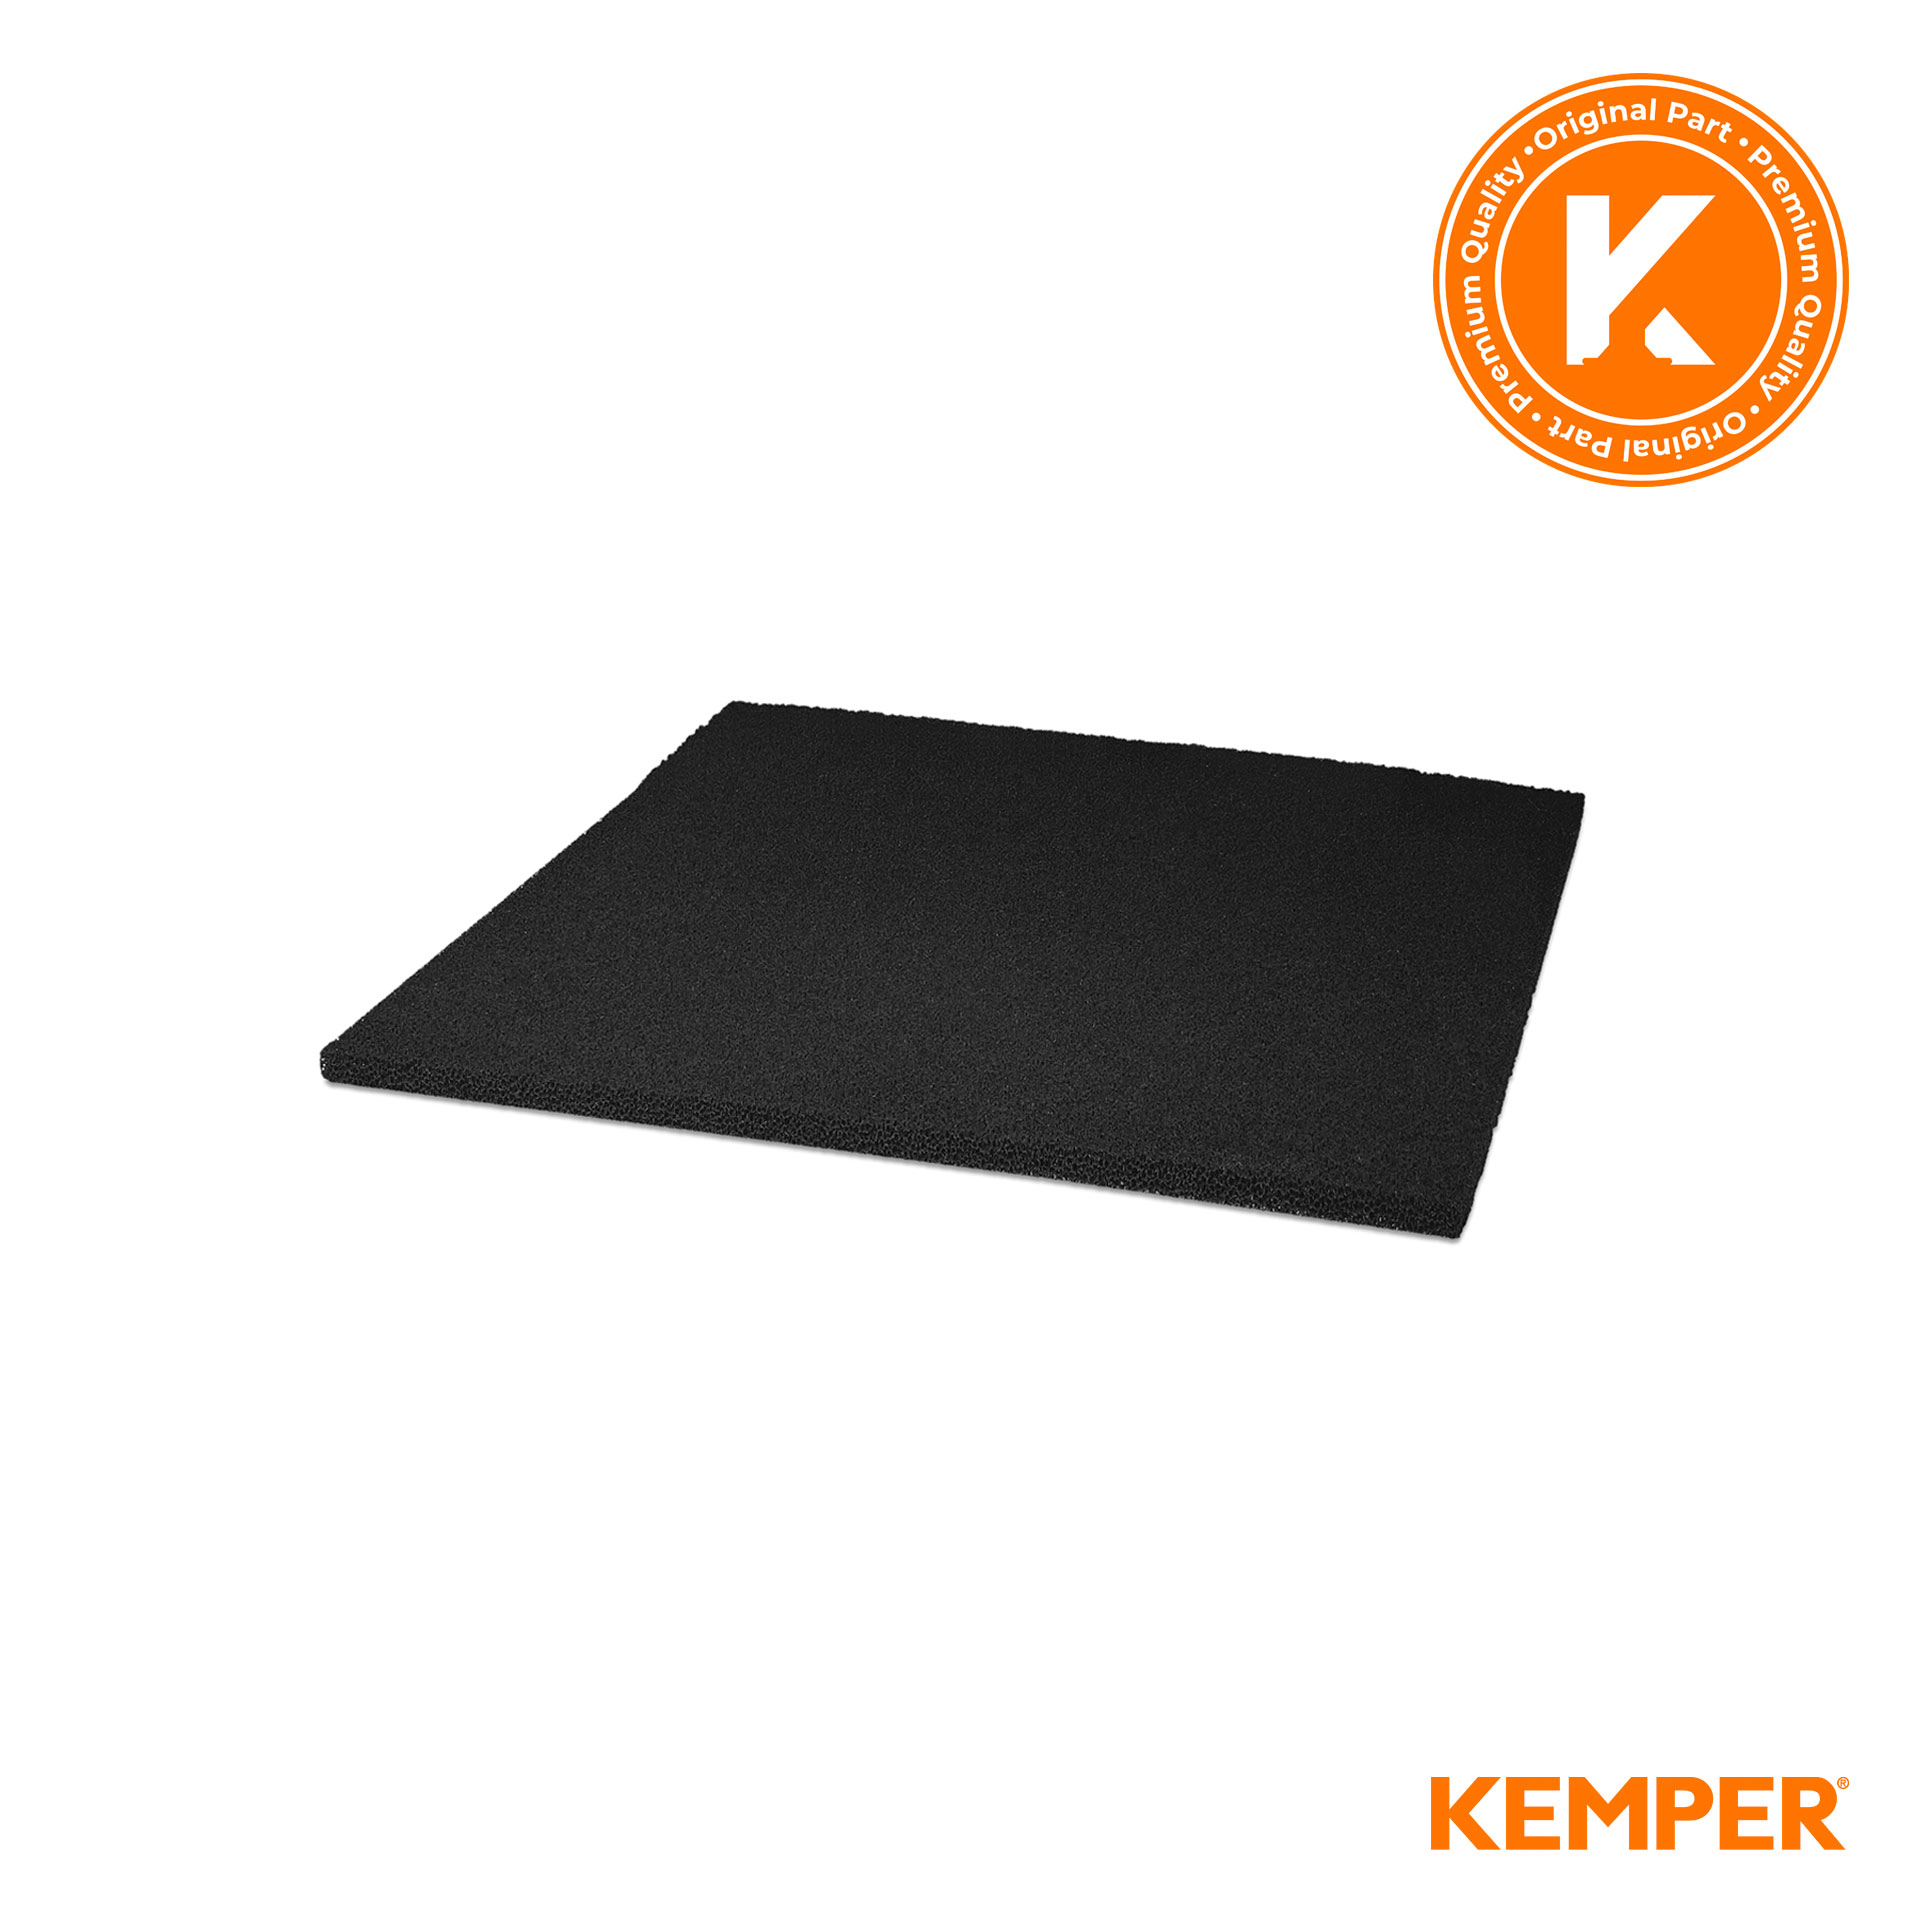 Original KEMPER FilterTable Filtermatte - HAN: 1090345 - 572x566x20 mm - Aktivkohlematte - passend für: KEMPER FilterTable